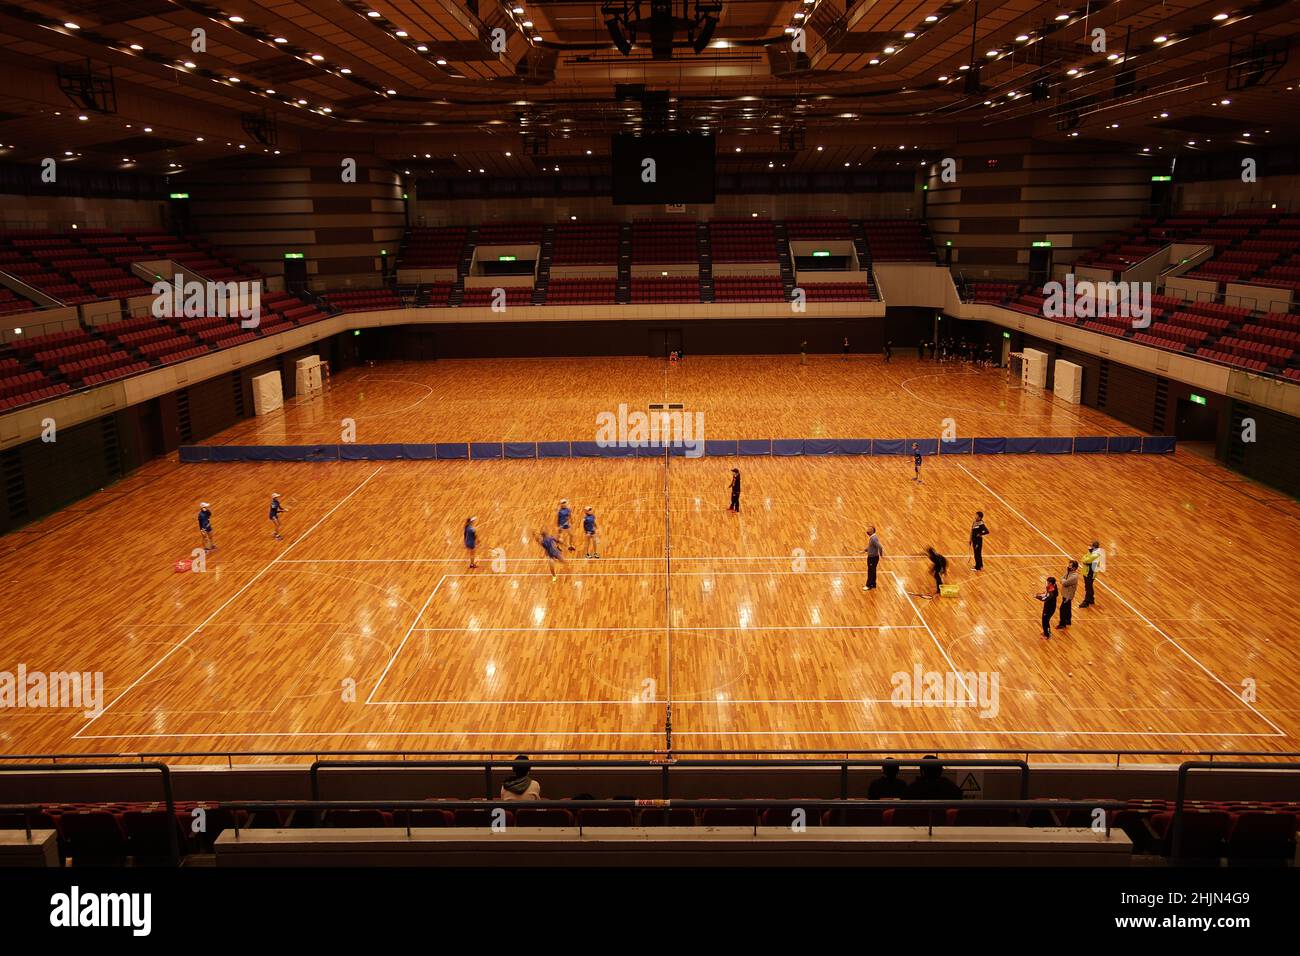 Hamamatsu, Shizuoka, Japan, 2022/30/01 ,  interior of the Hamamatsu Arena, which is a　multipurpose indoor sporting arena located in Hamamatsu, Shizuok Stock Photo